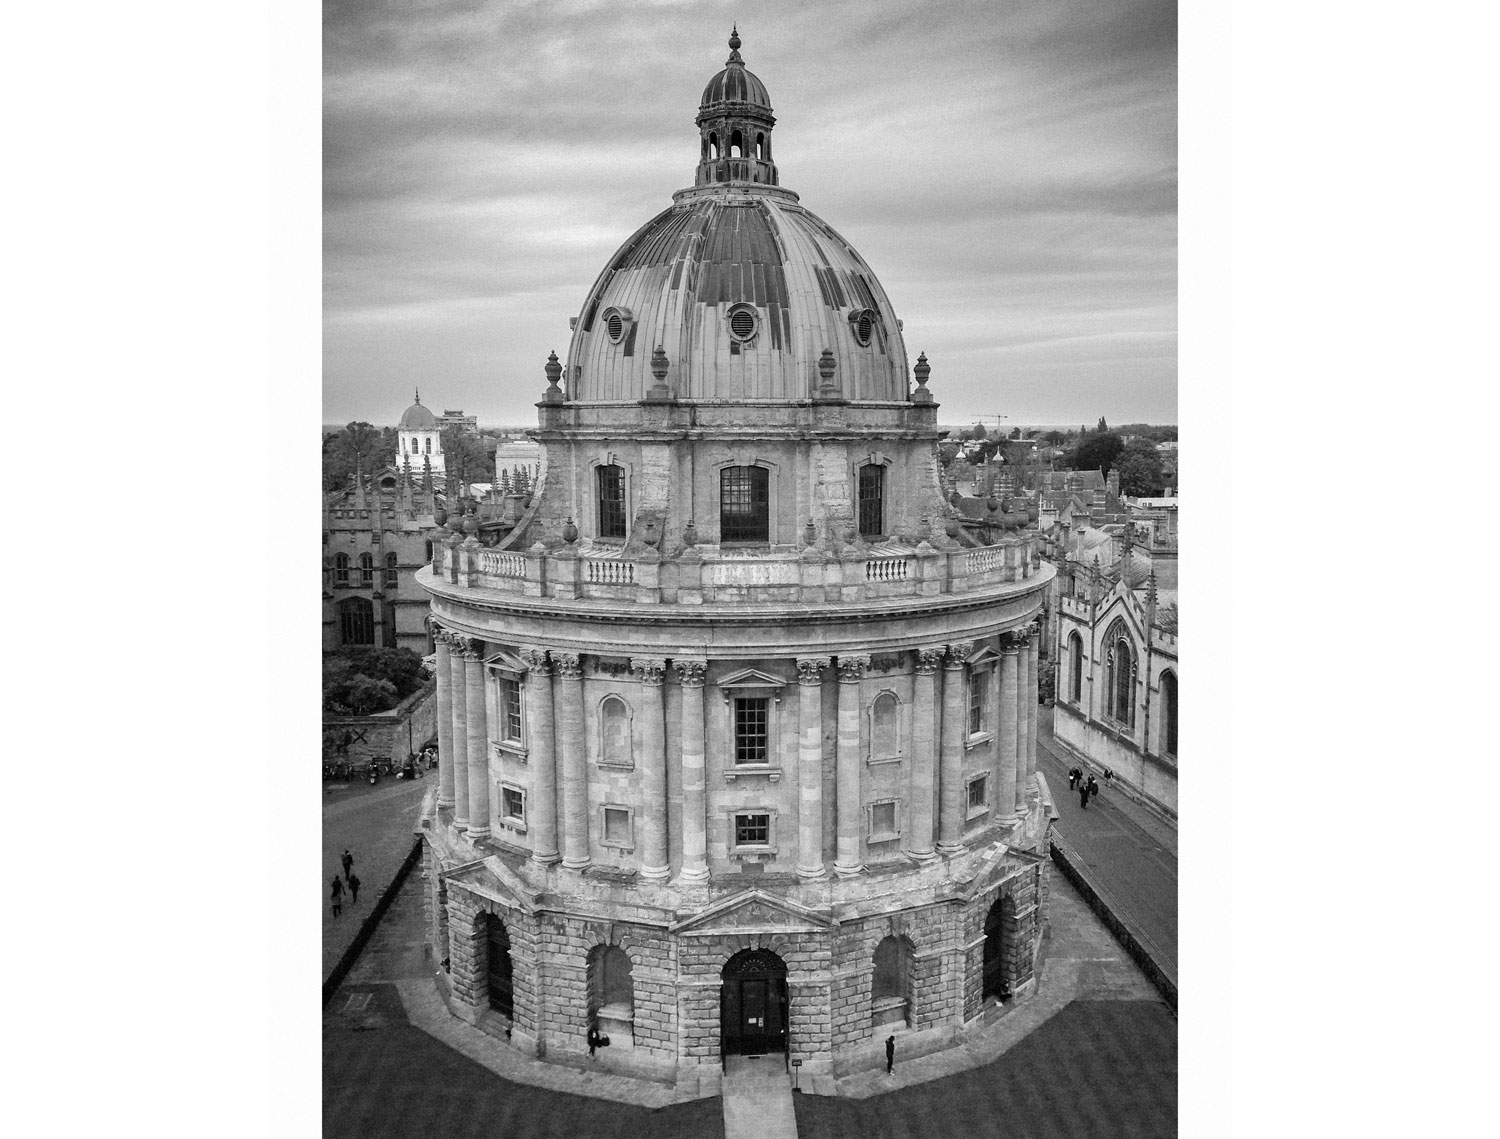   Oxford, England May 2015  